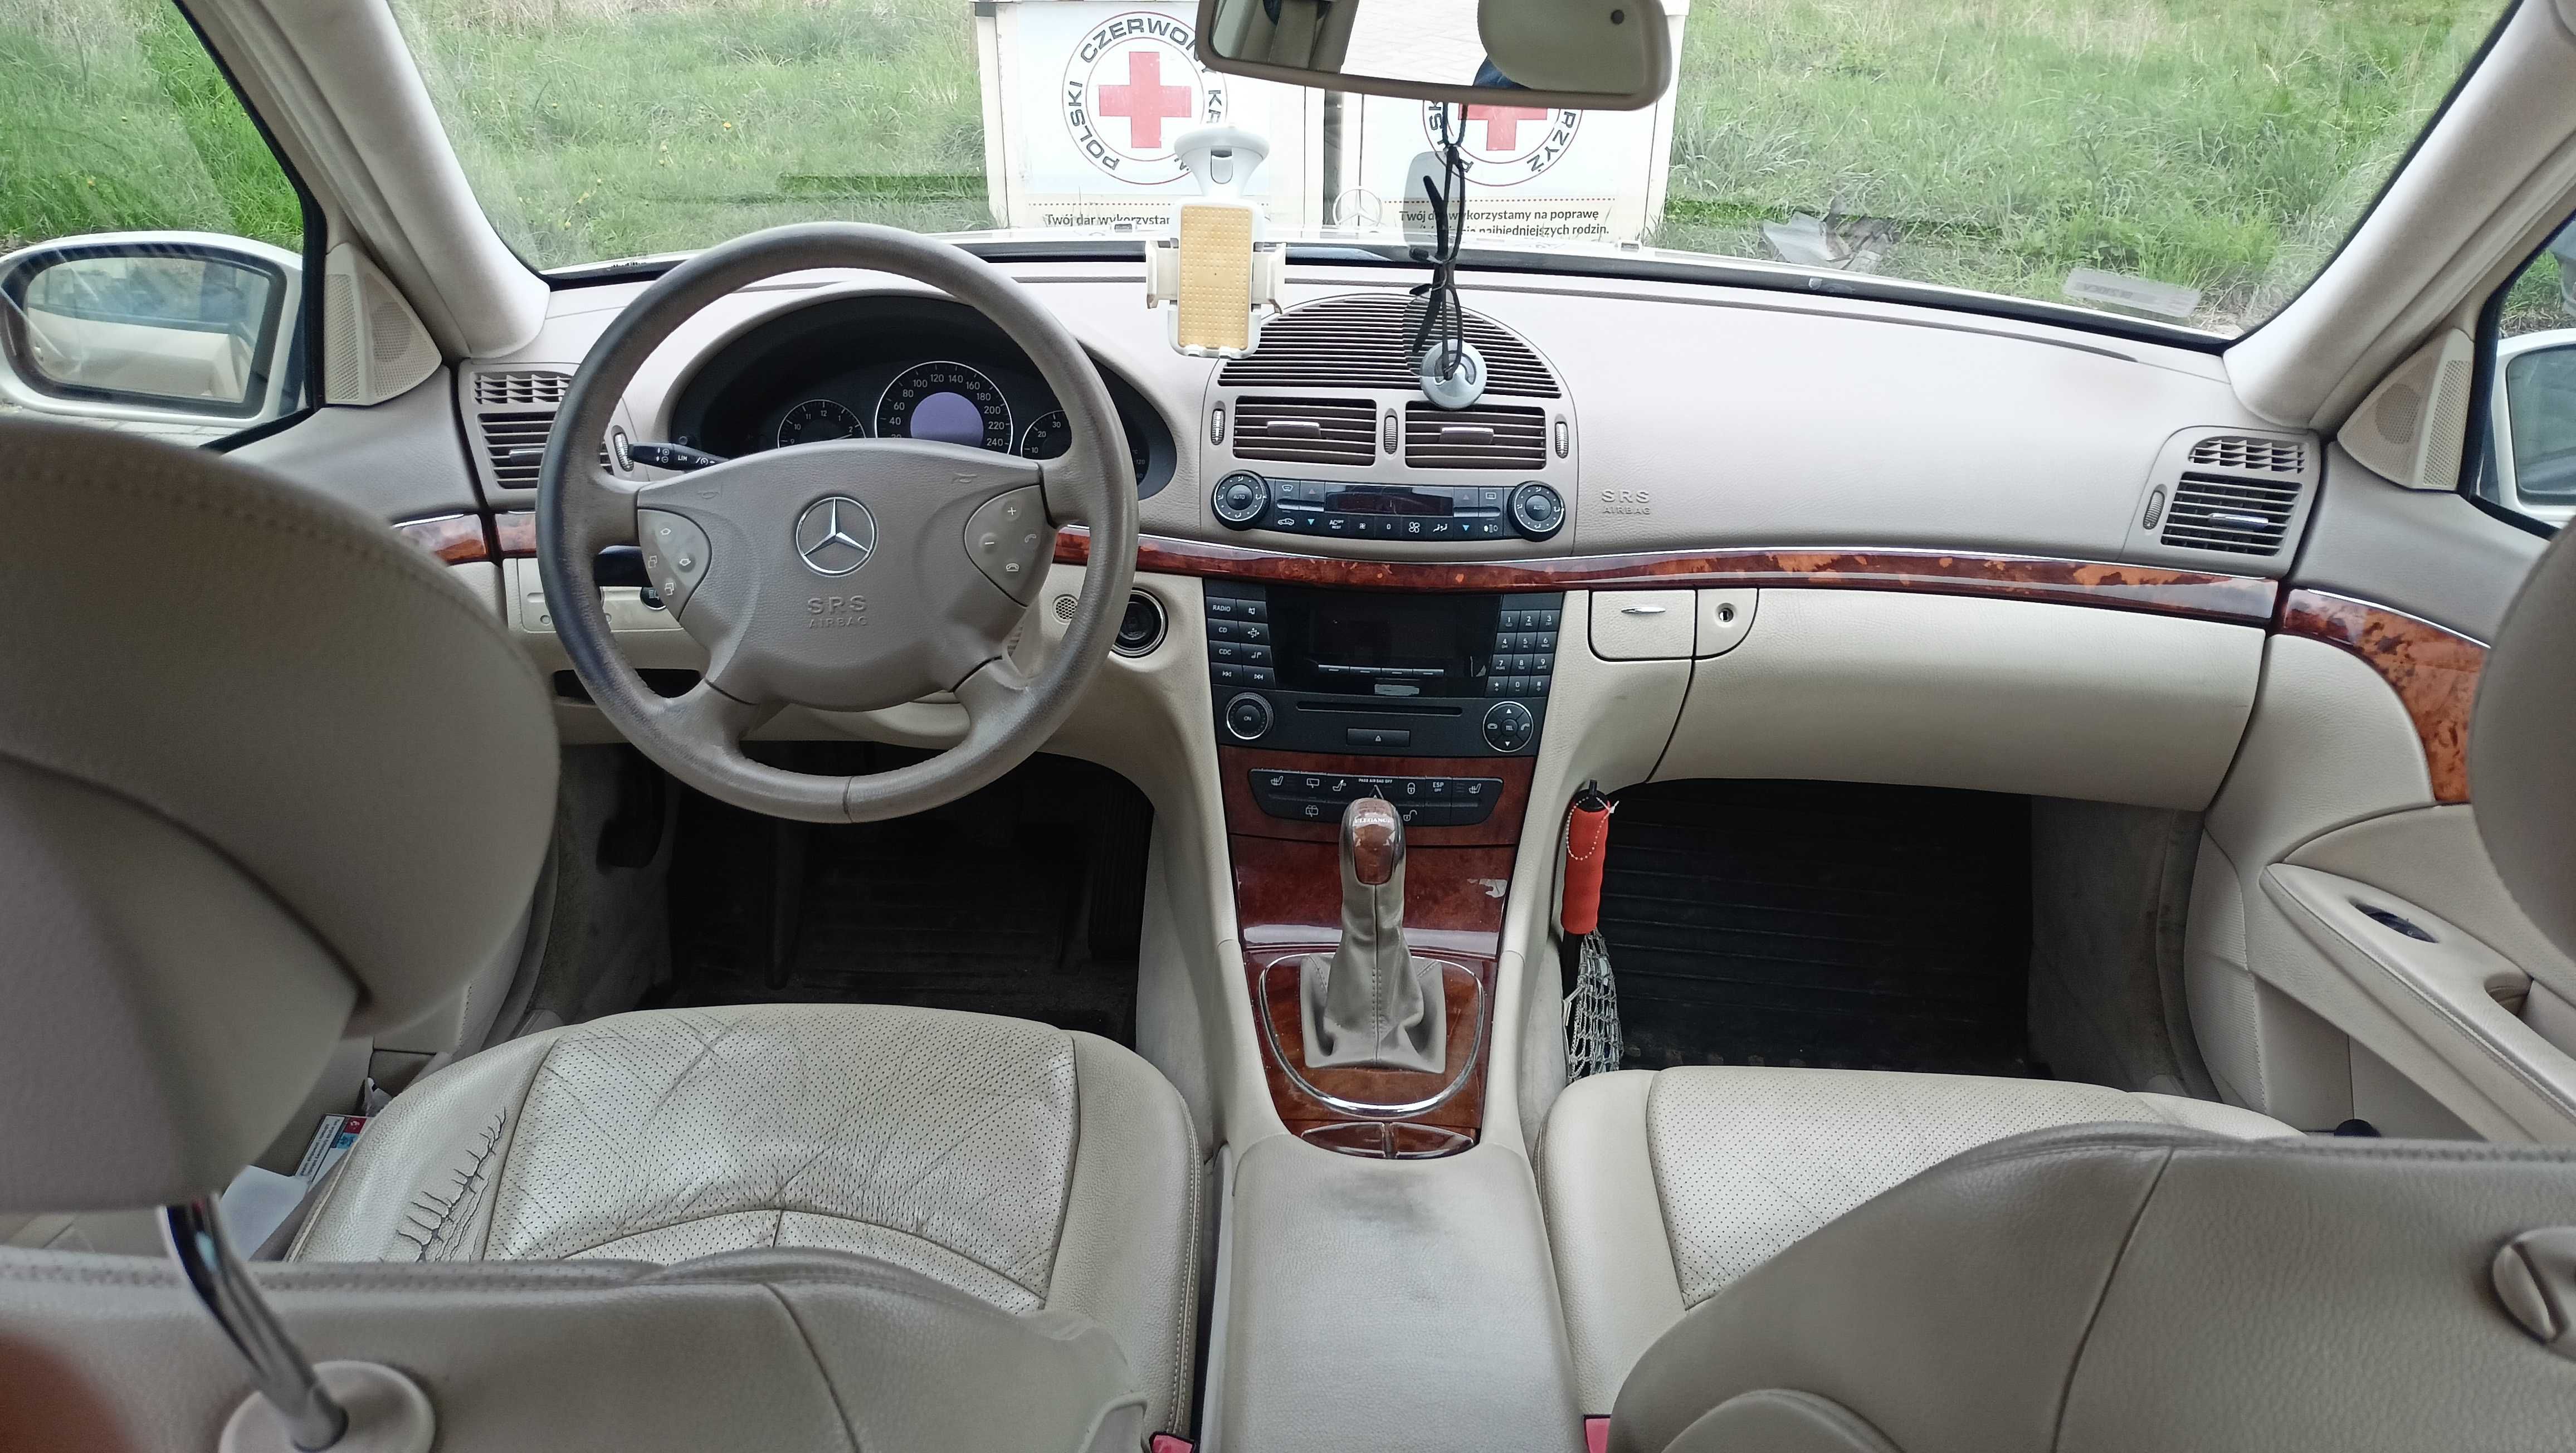 Mercedes E200 1.8 kompresor benzyna polski salon